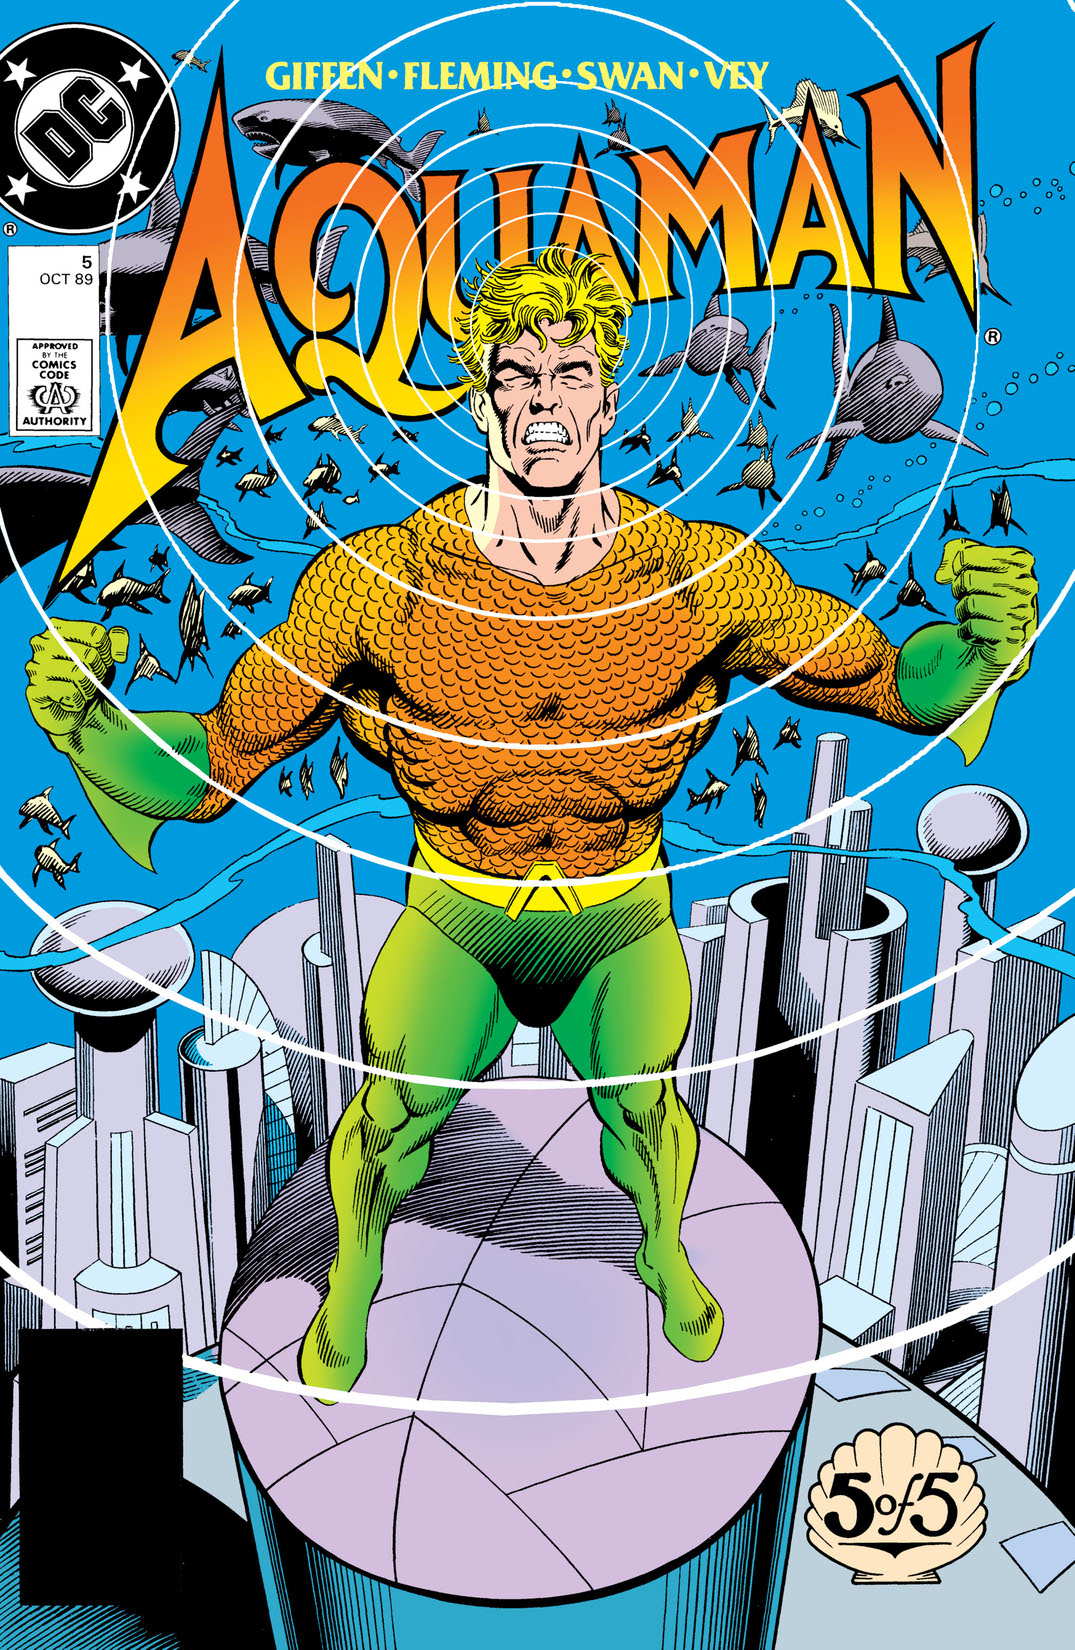 Aquaman (1989-1989) #5 preview images